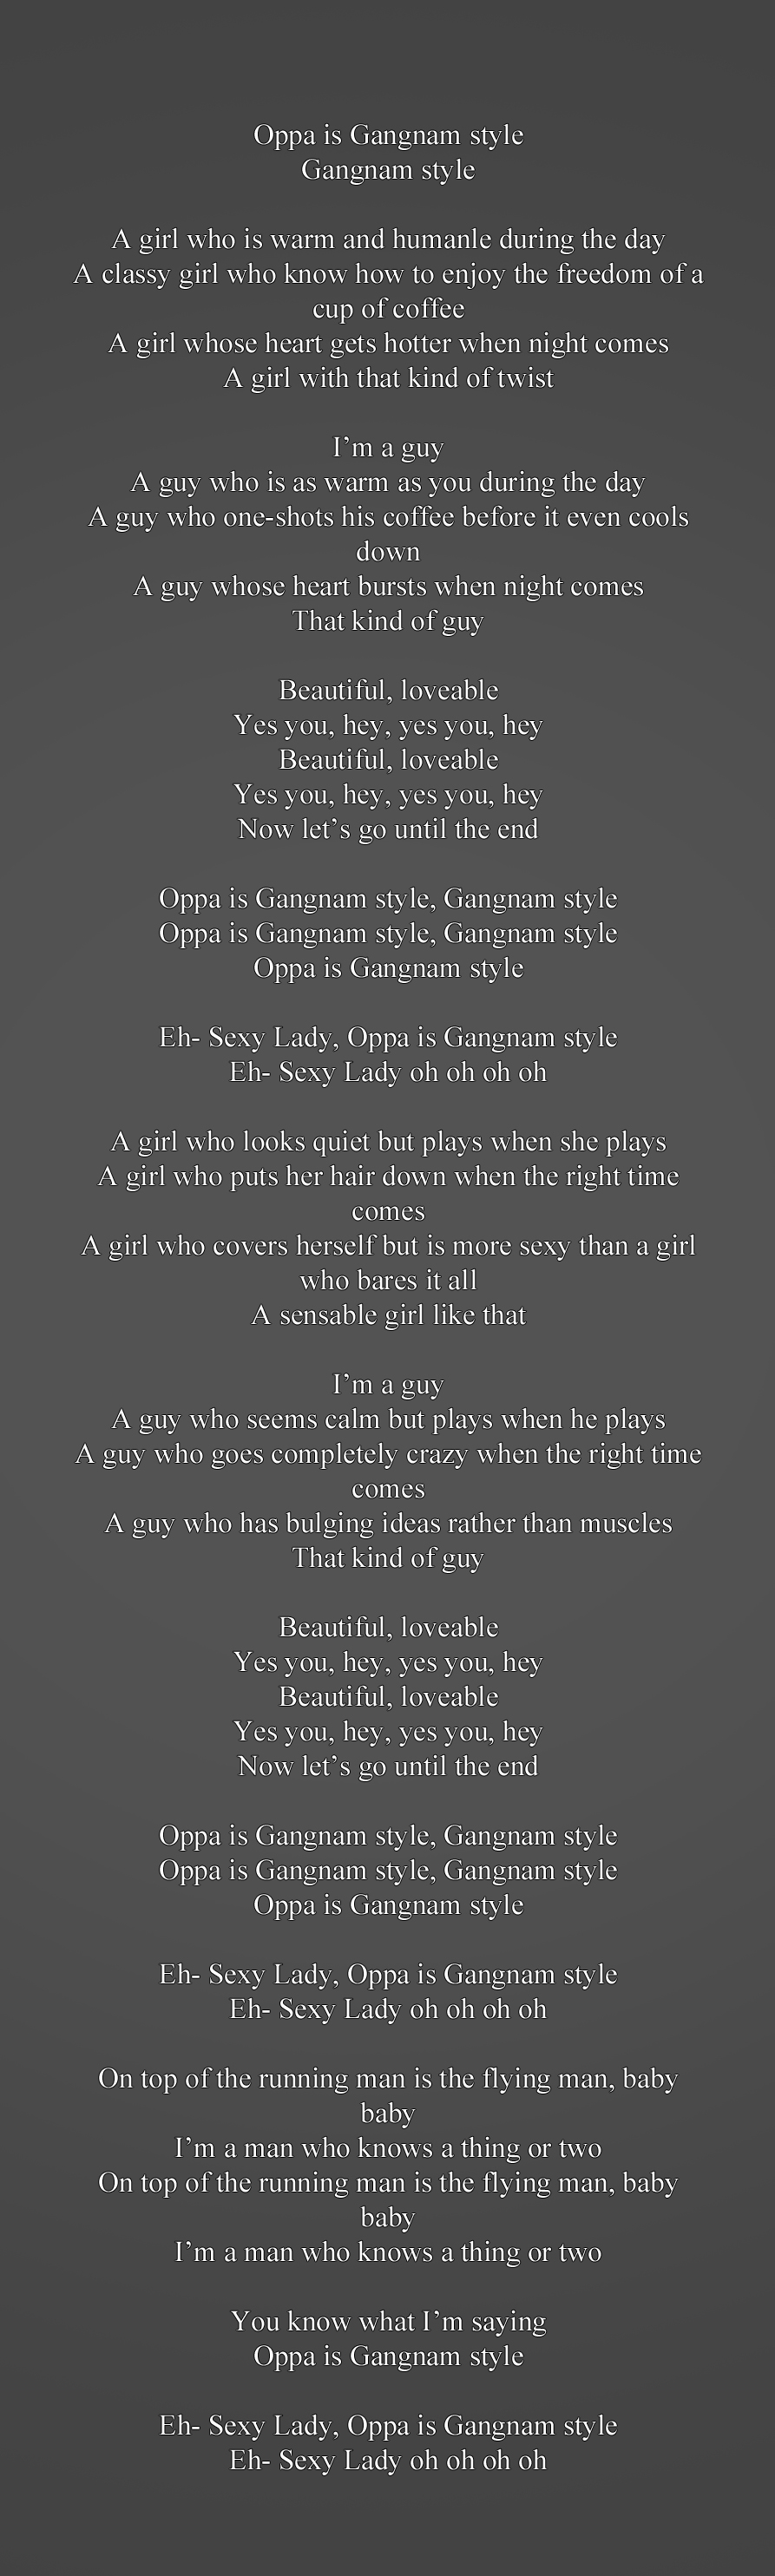 oppa gangnam style lyrics english